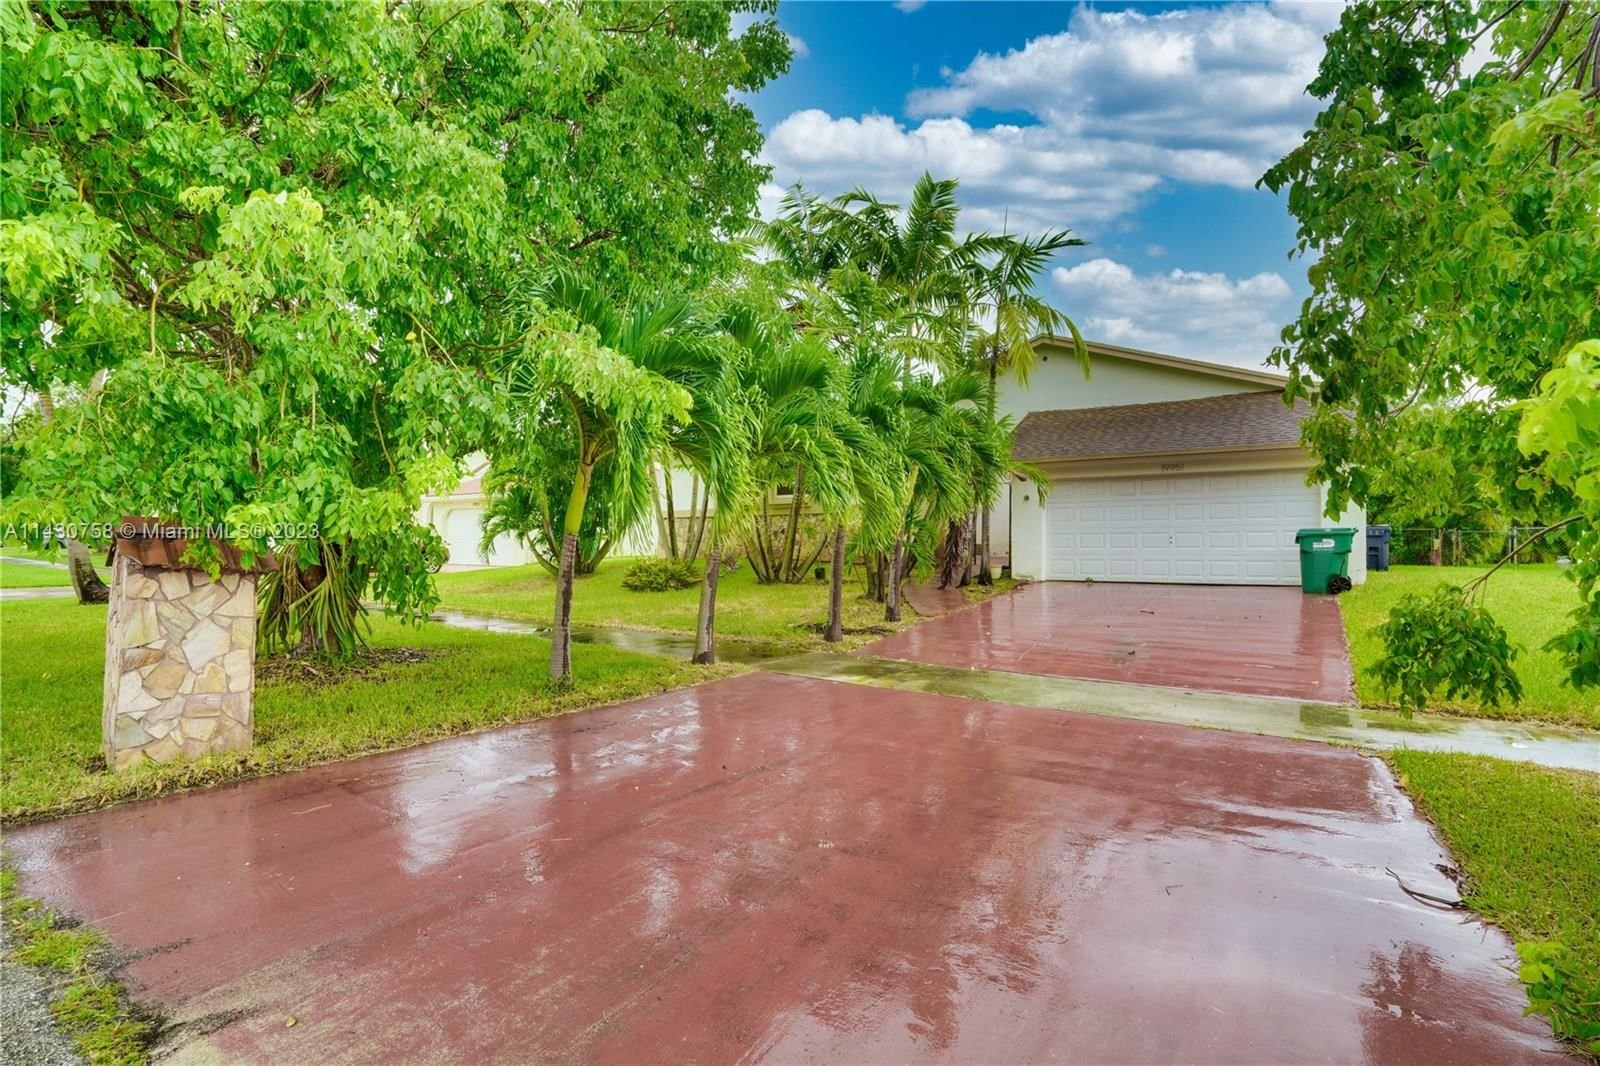 Real estate property located at 19951 79th Ave, Miami-Dade County, SAGA BAY SEC 1 PT 4, Cutler Bay, FL